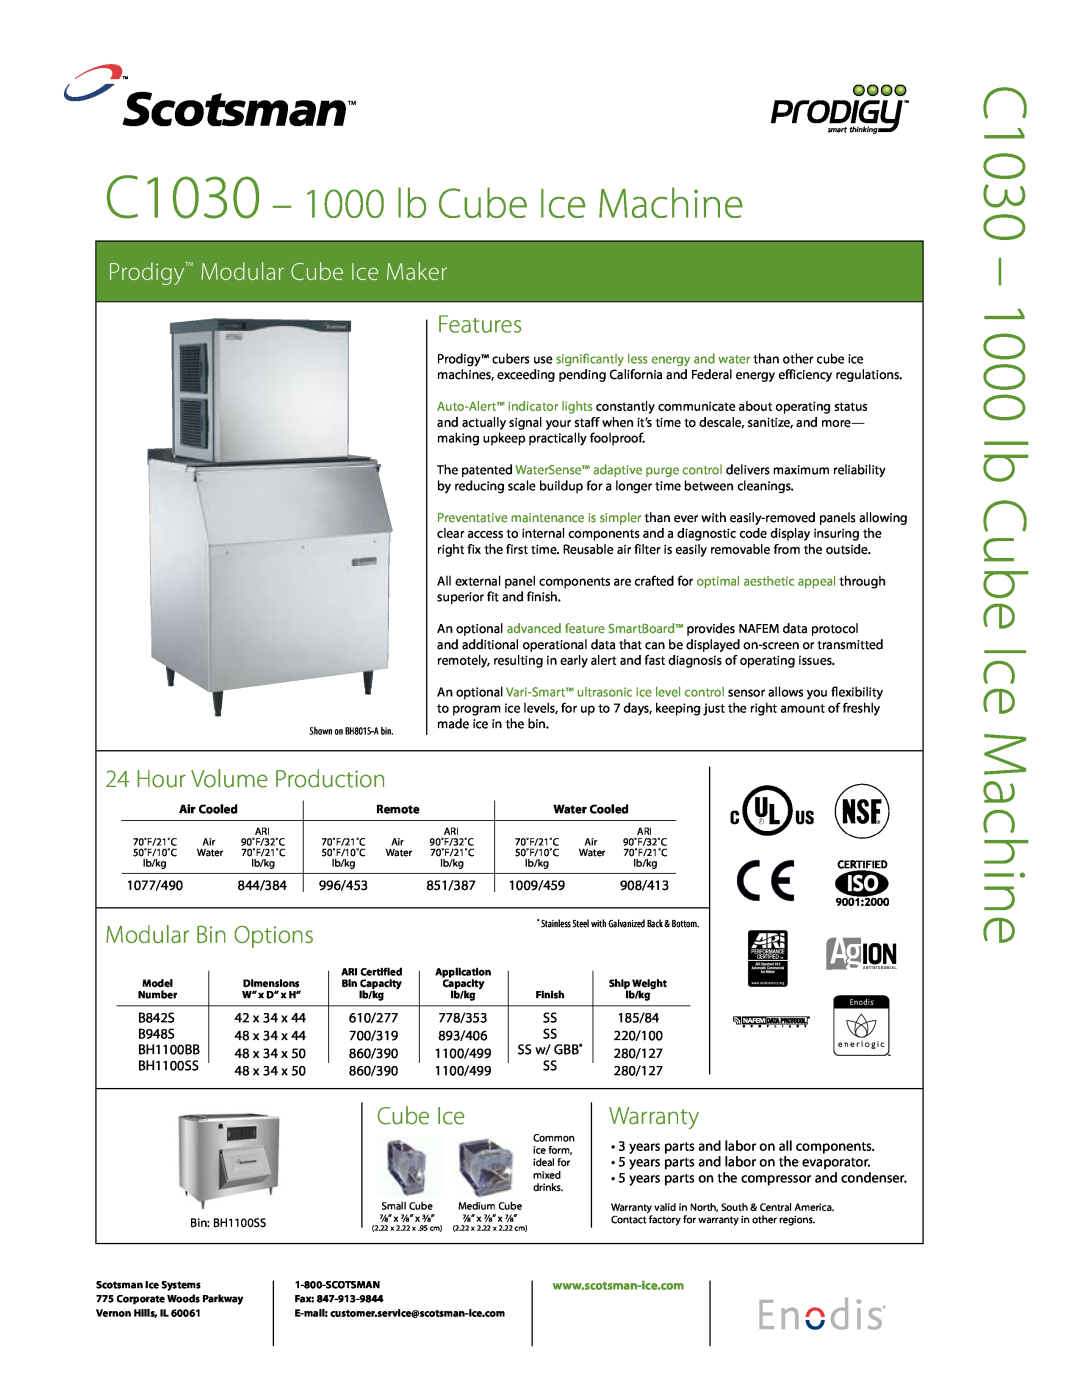 Scotsman Ice C1030 warranty Features, Hour Volume Production, Cube Ice, Warranty, Modular Bin Options, Machine 